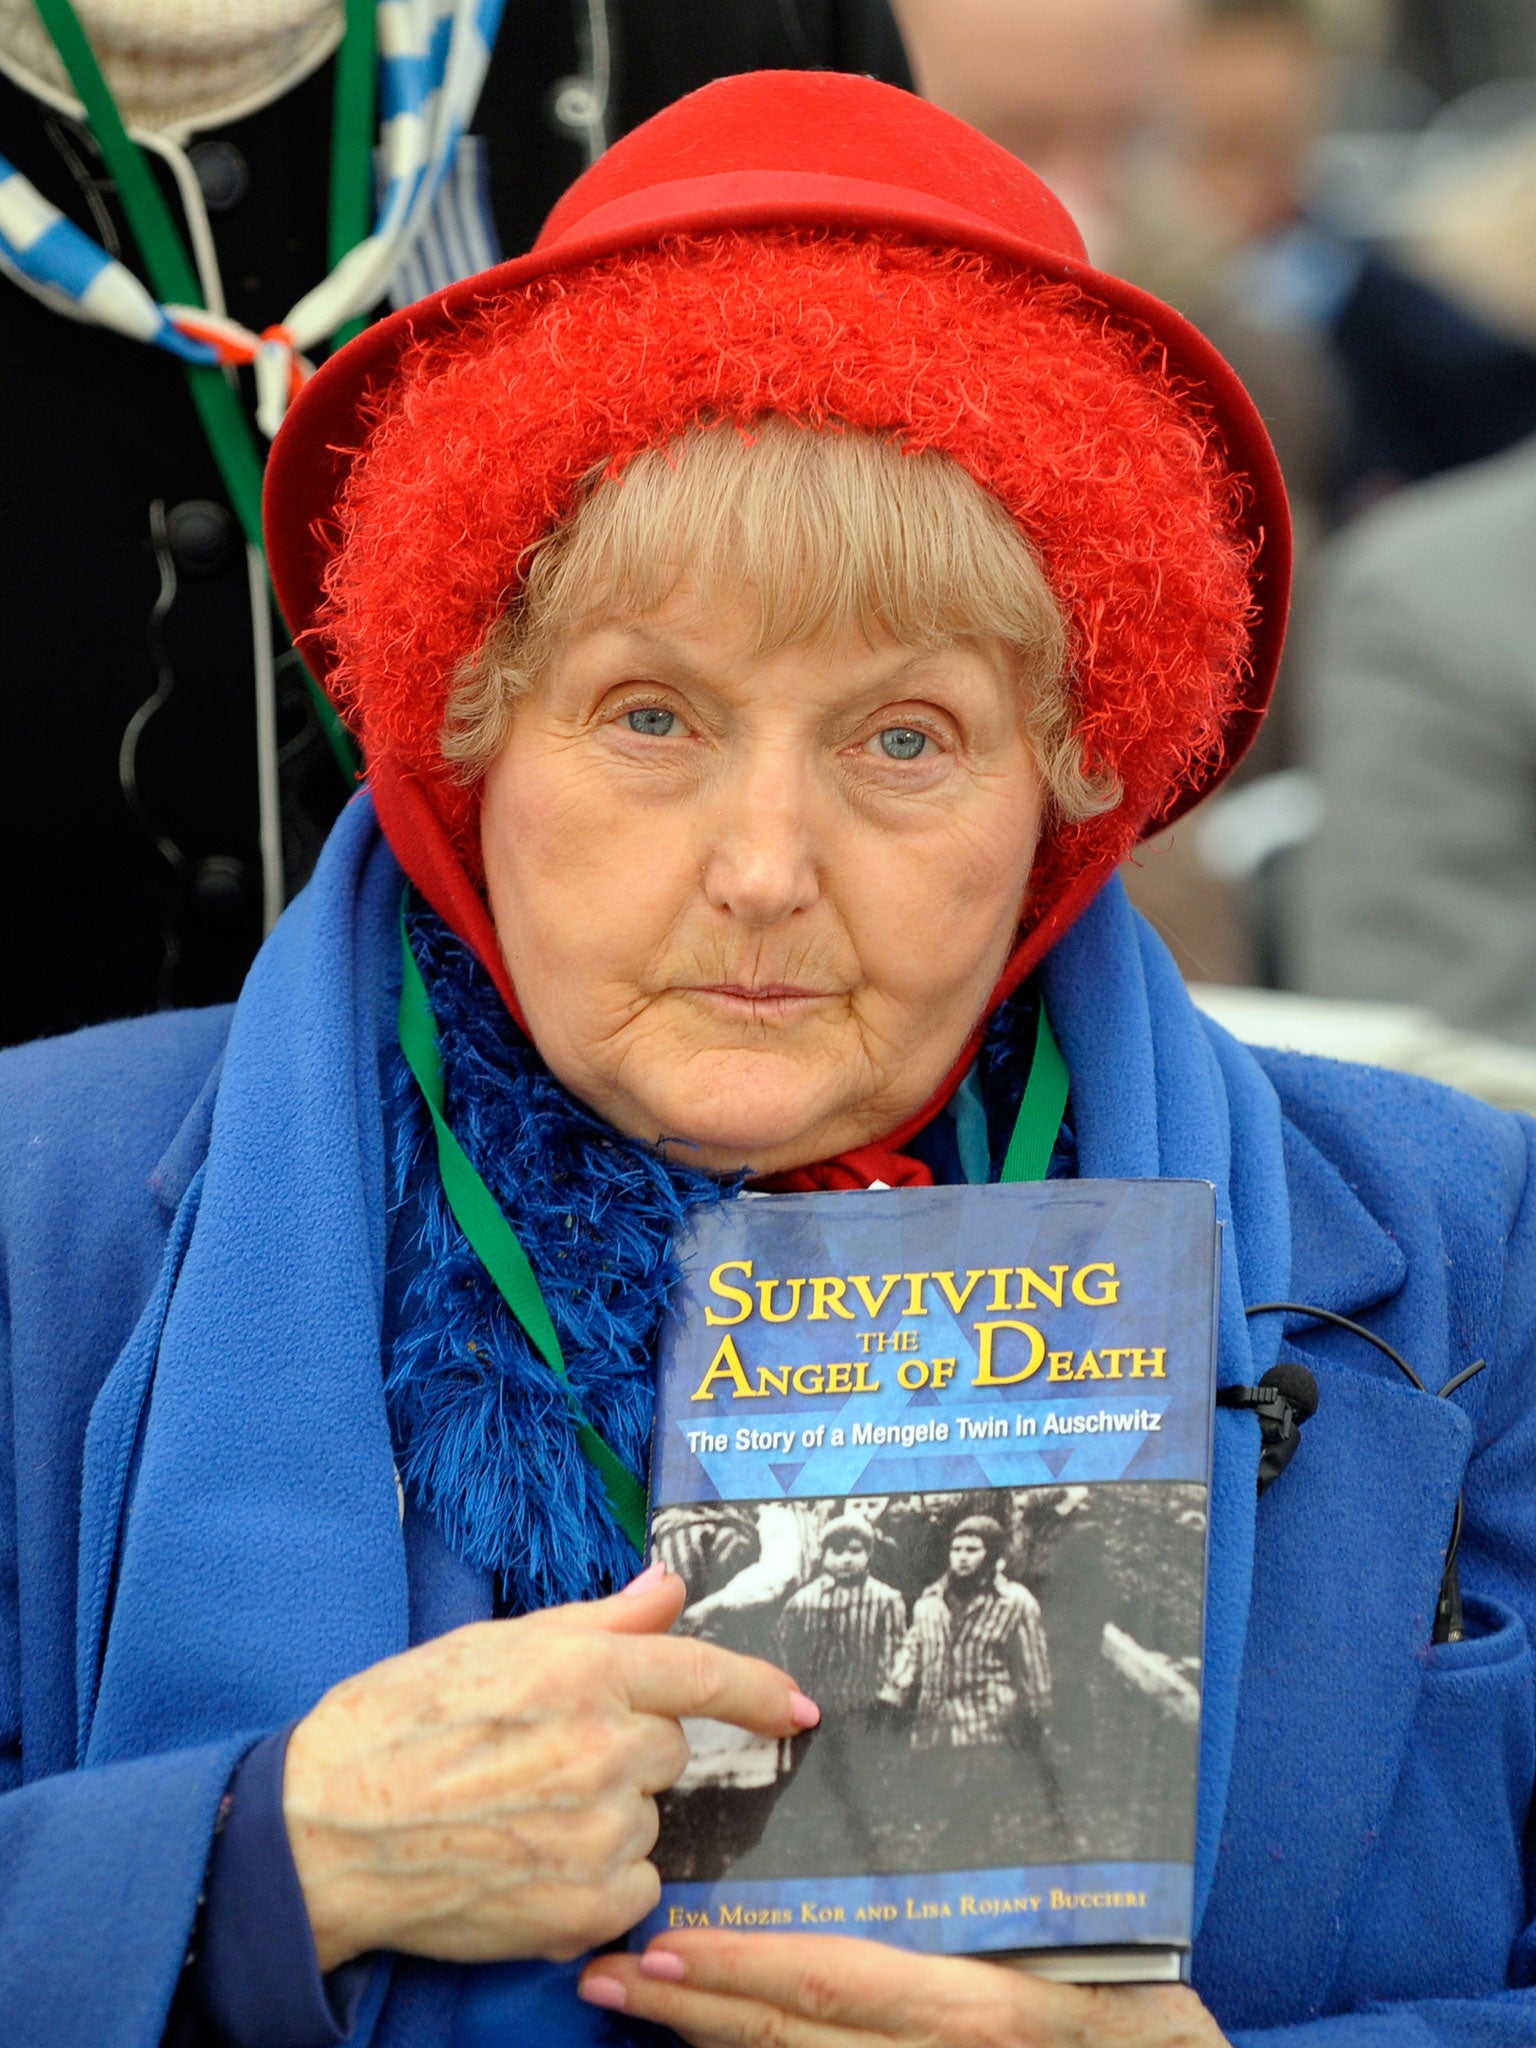 Eva Mozes Kor, who survived being held at the Auschwitz death camp